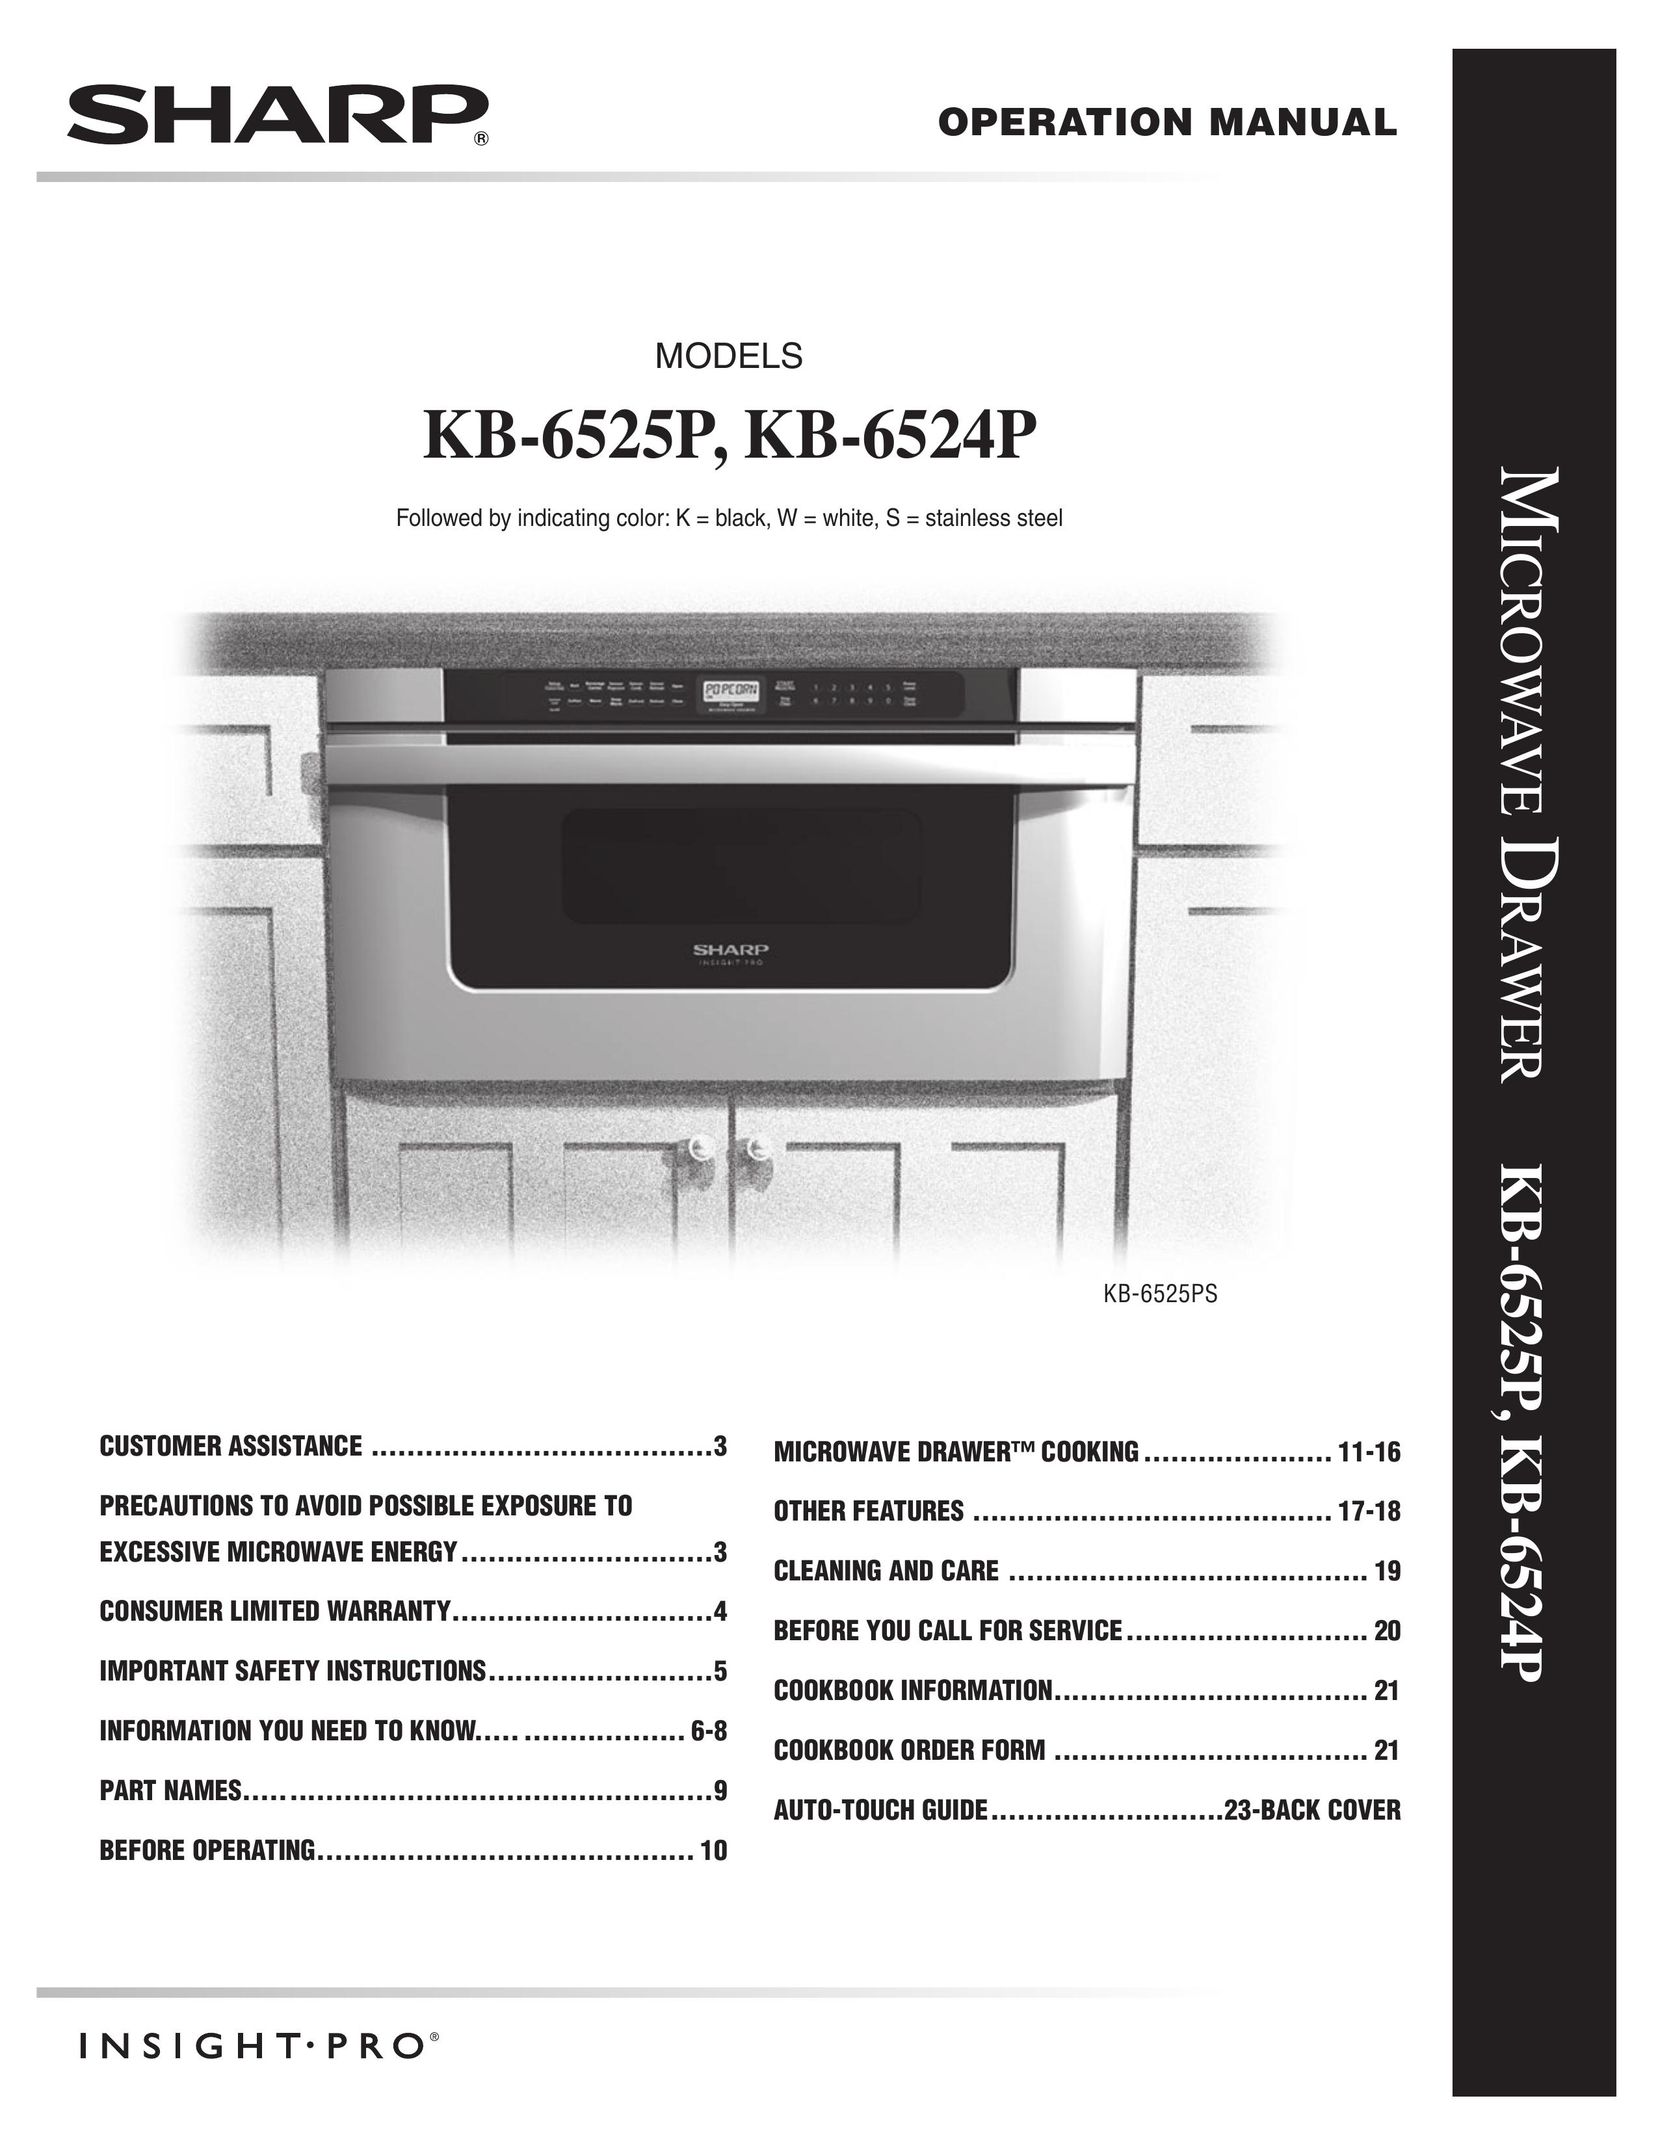 Sharp KB-6524P Microwave Oven User Manual